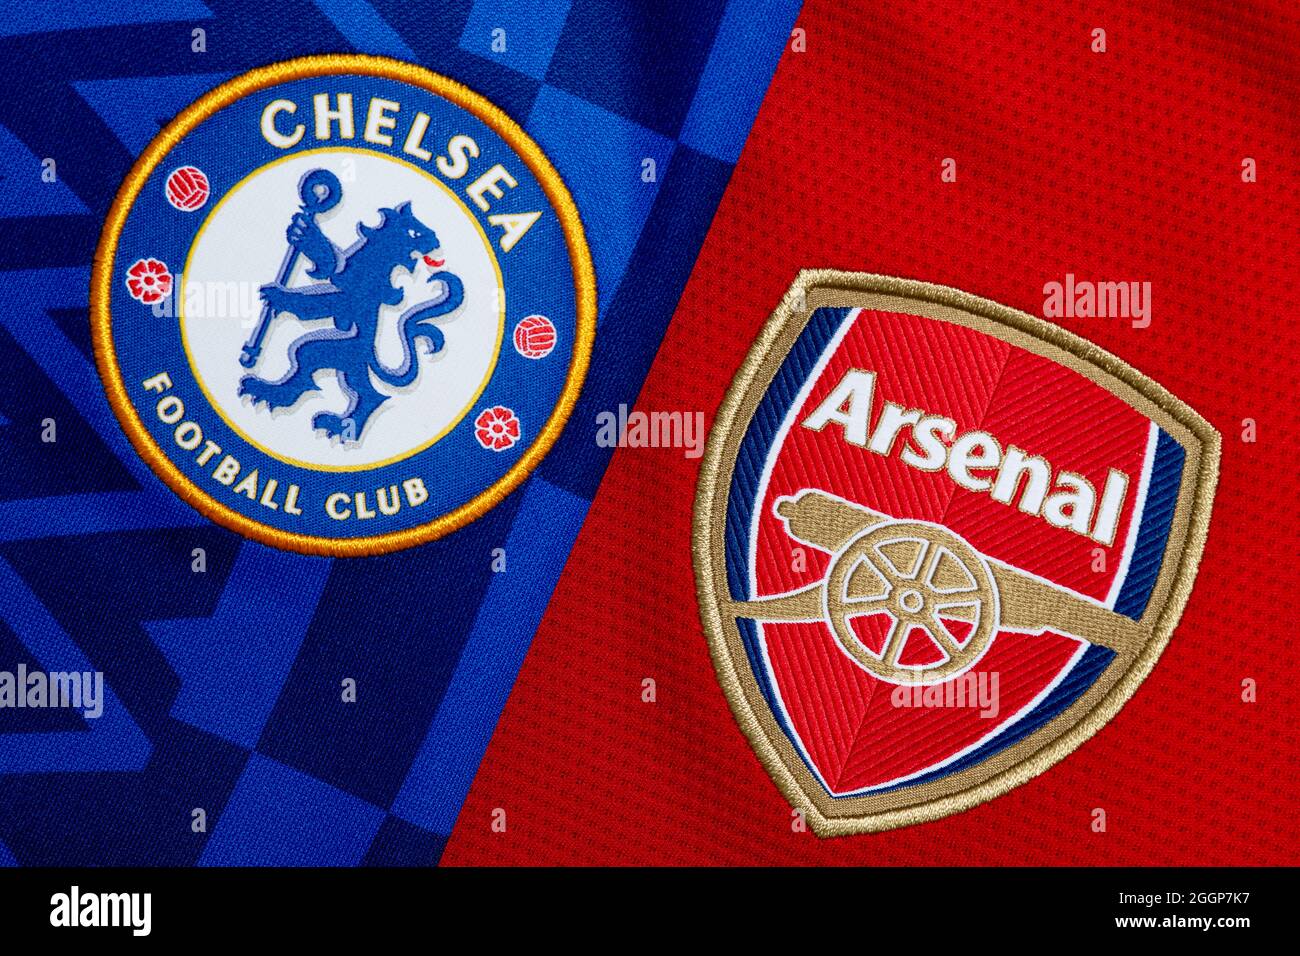 Nahaufnahme des Vereinswappens von Arsenal & Chelsea. Stockfoto